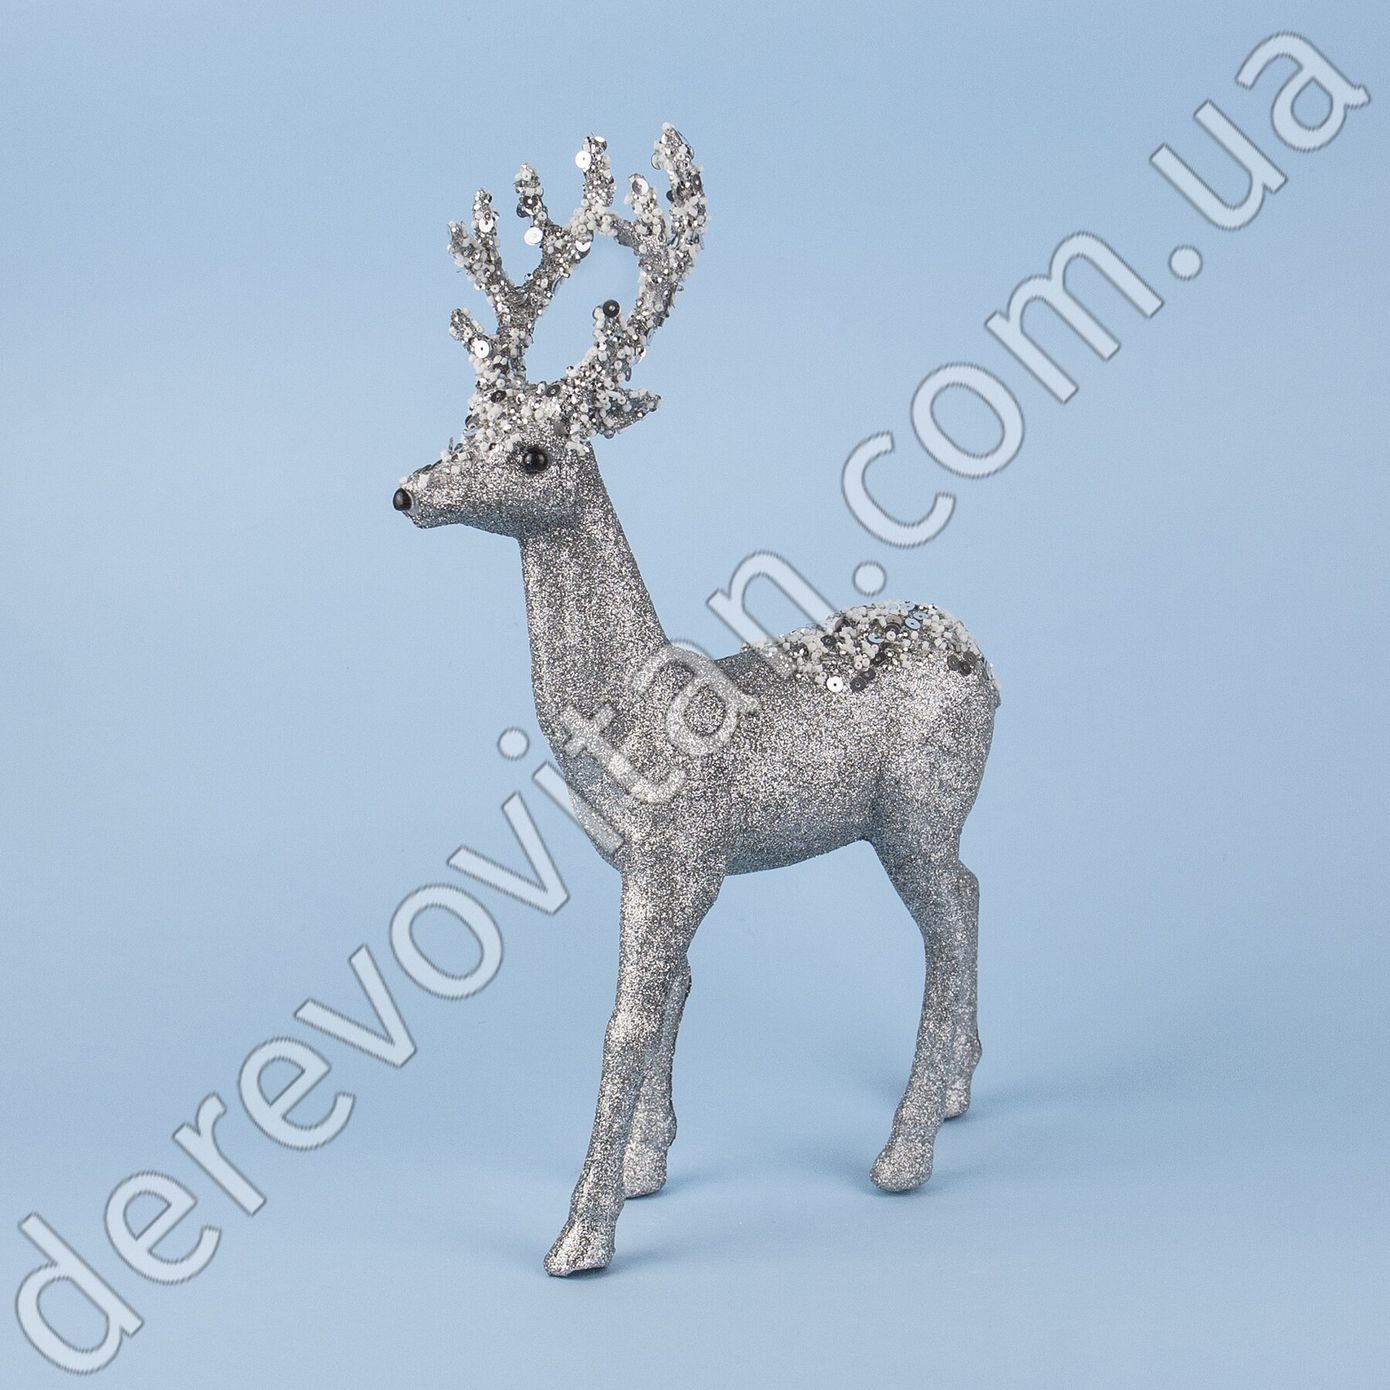 Новогодний декор фигура "Олень в блестках" серебро, 35×24×7 см